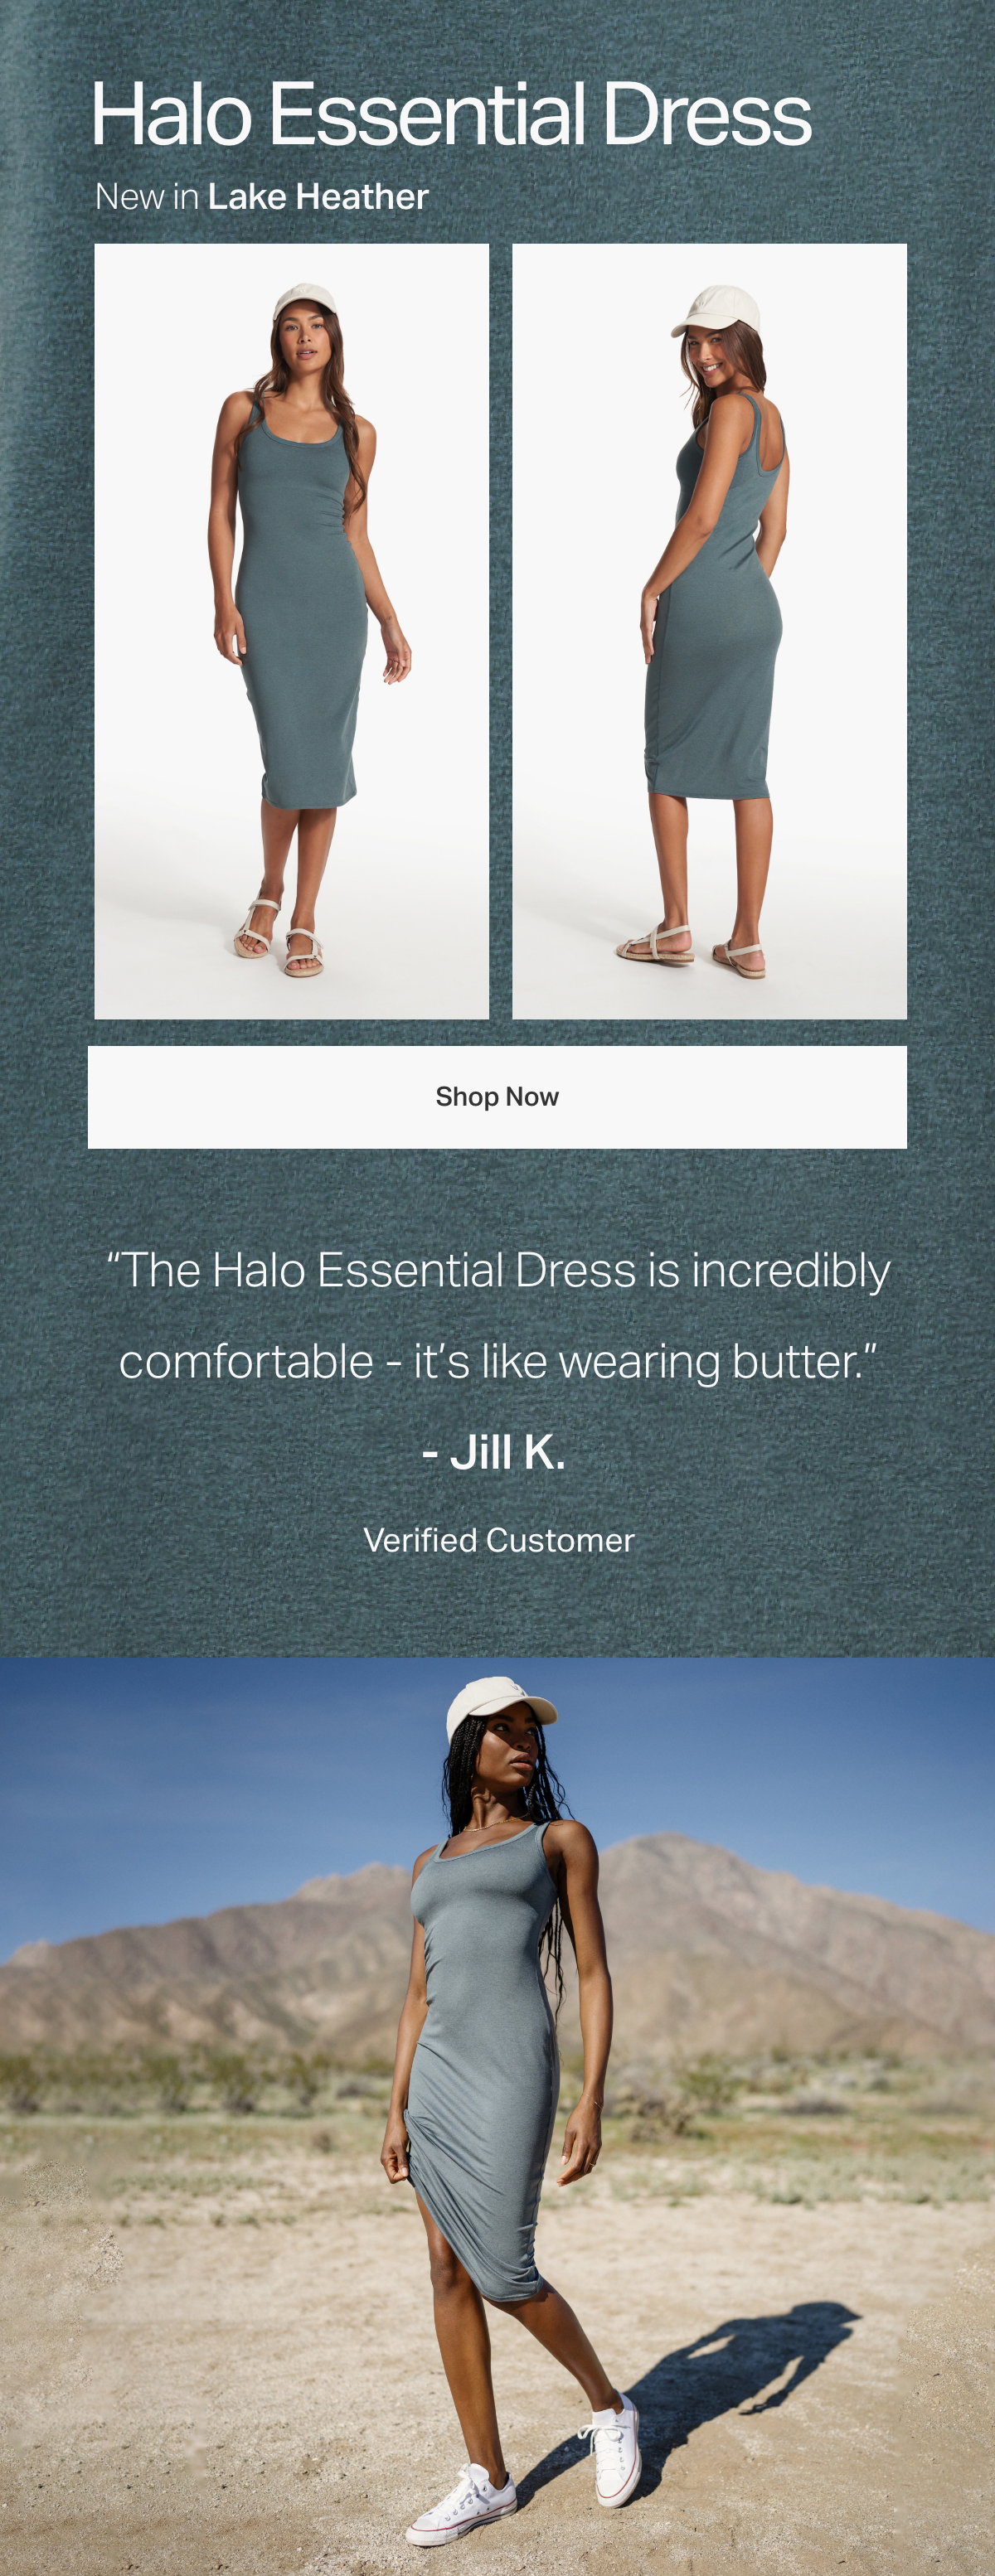 Halo Essential Dress, Heather Grey Tank Dress